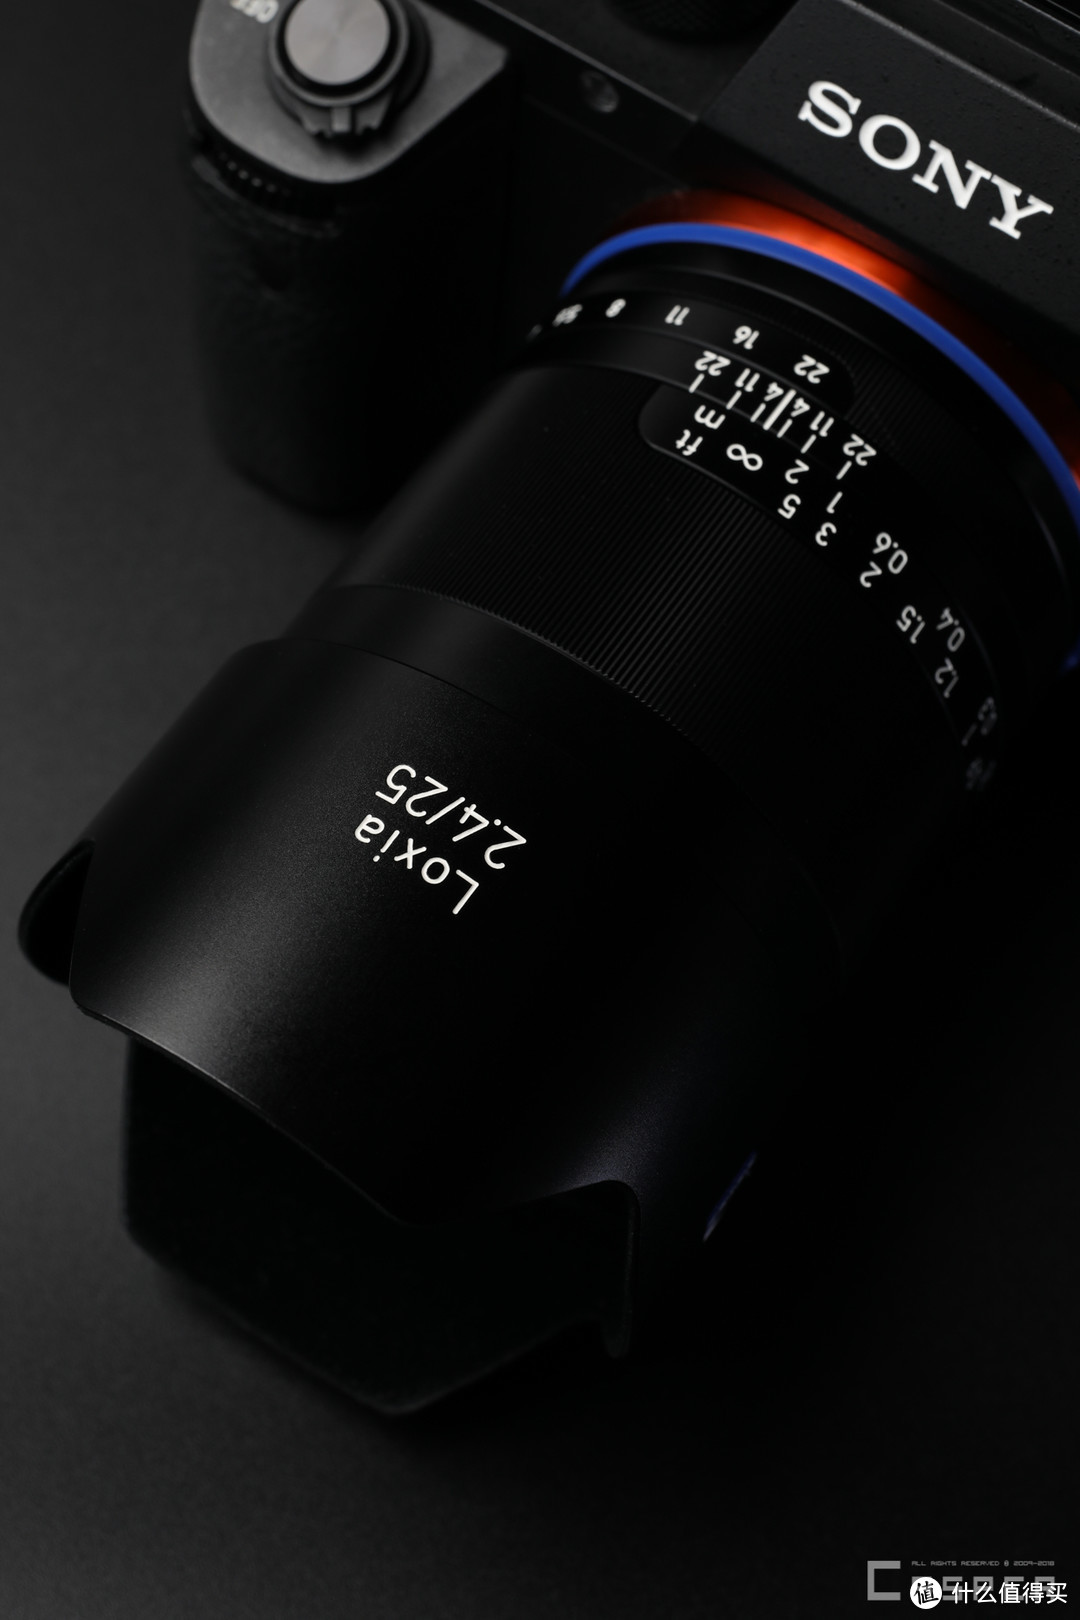 Zeiss 蔡司 loxia25mm f2.4 镜头 使用分享